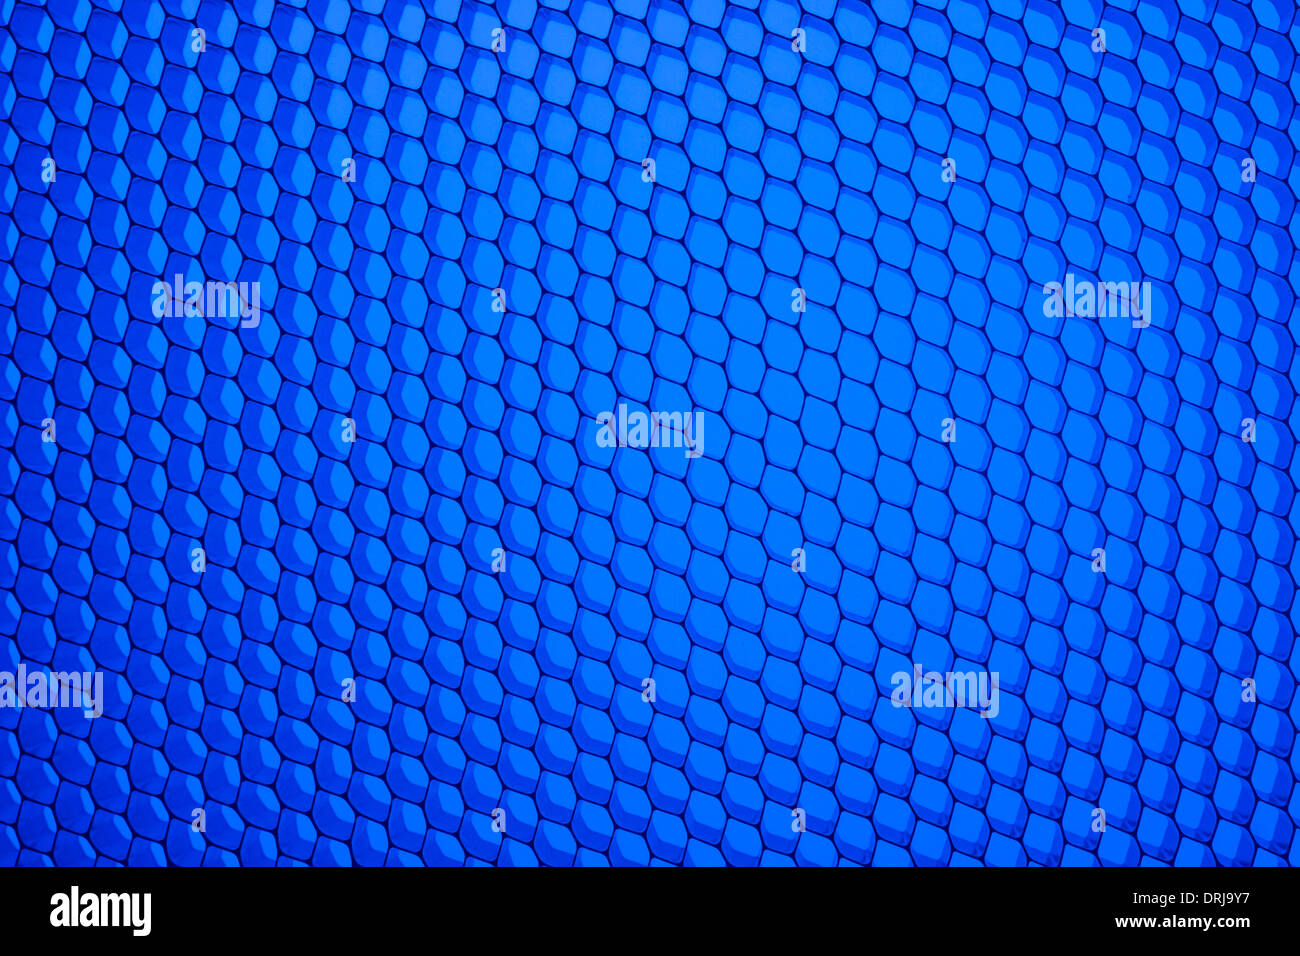 Honeycomb grid against blue background Stock Photo